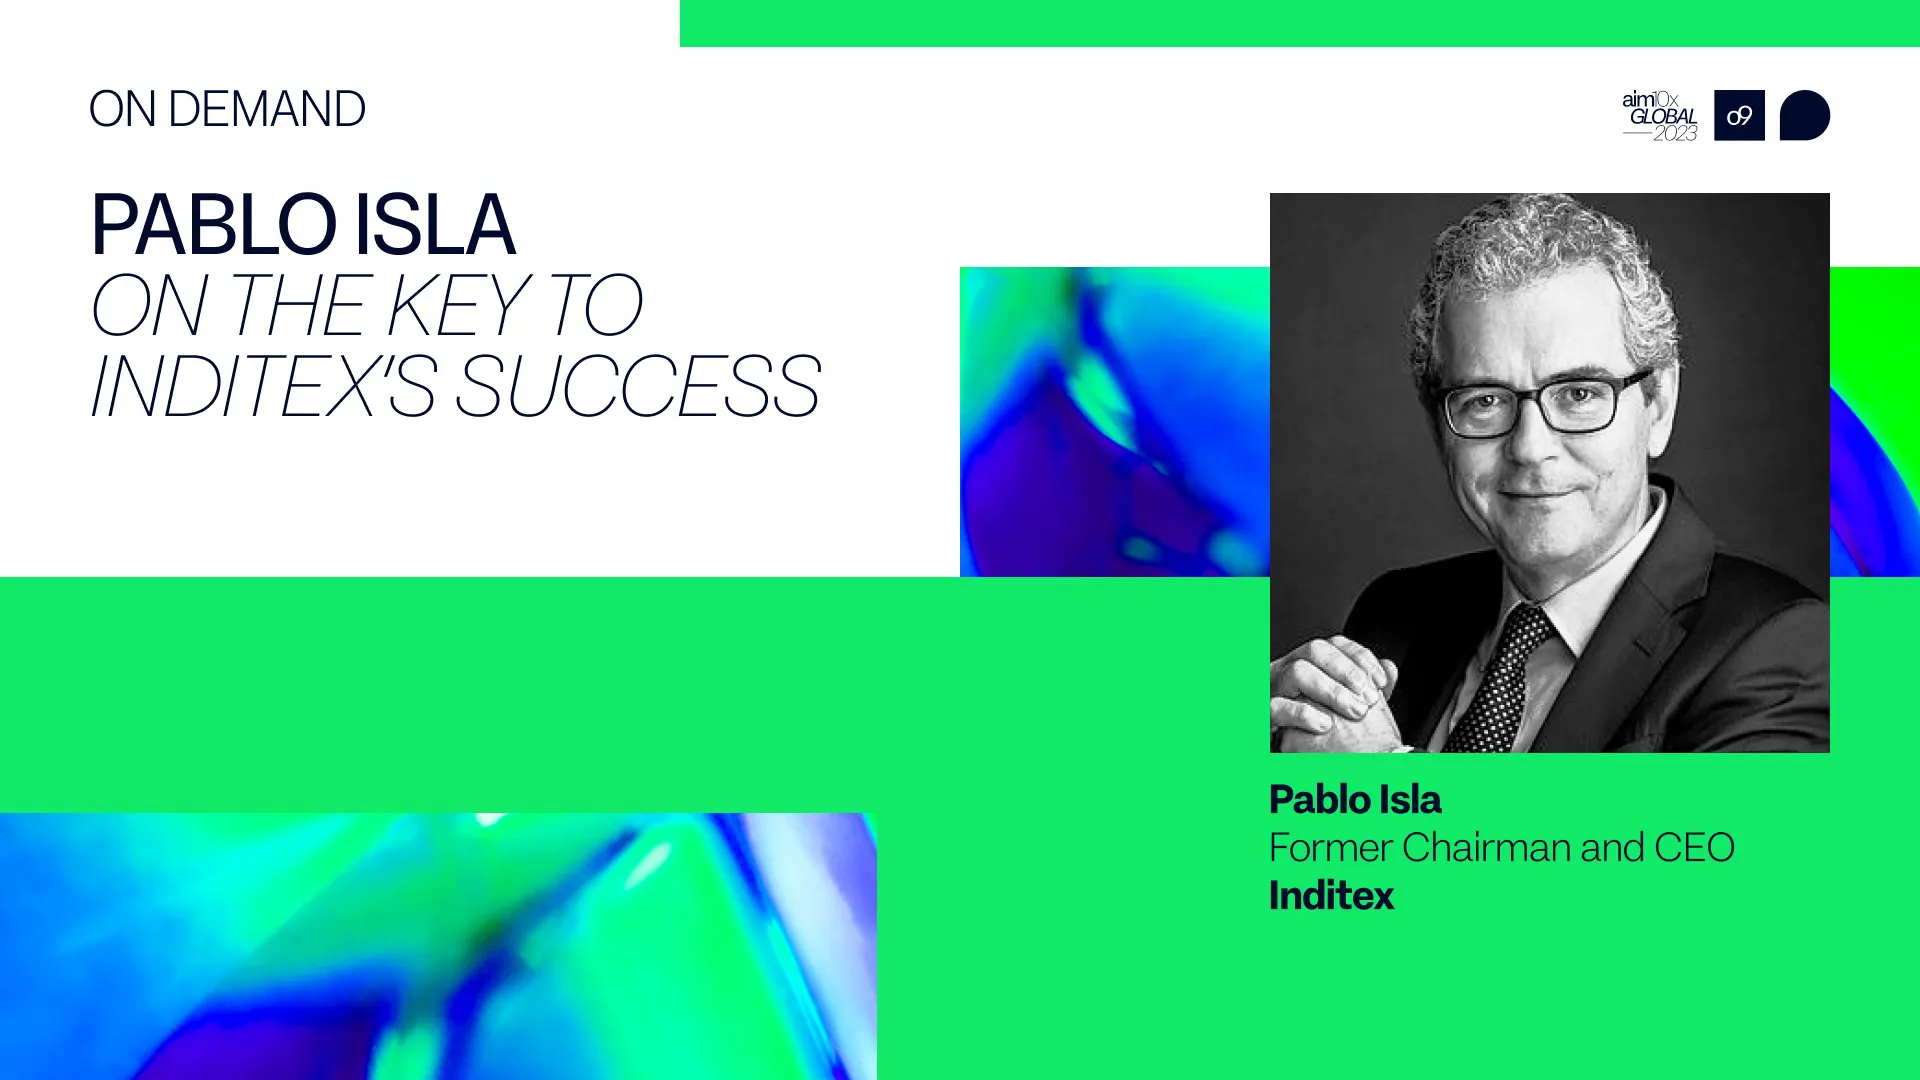 Pablo isla on the key to inditex’s success thumbnail